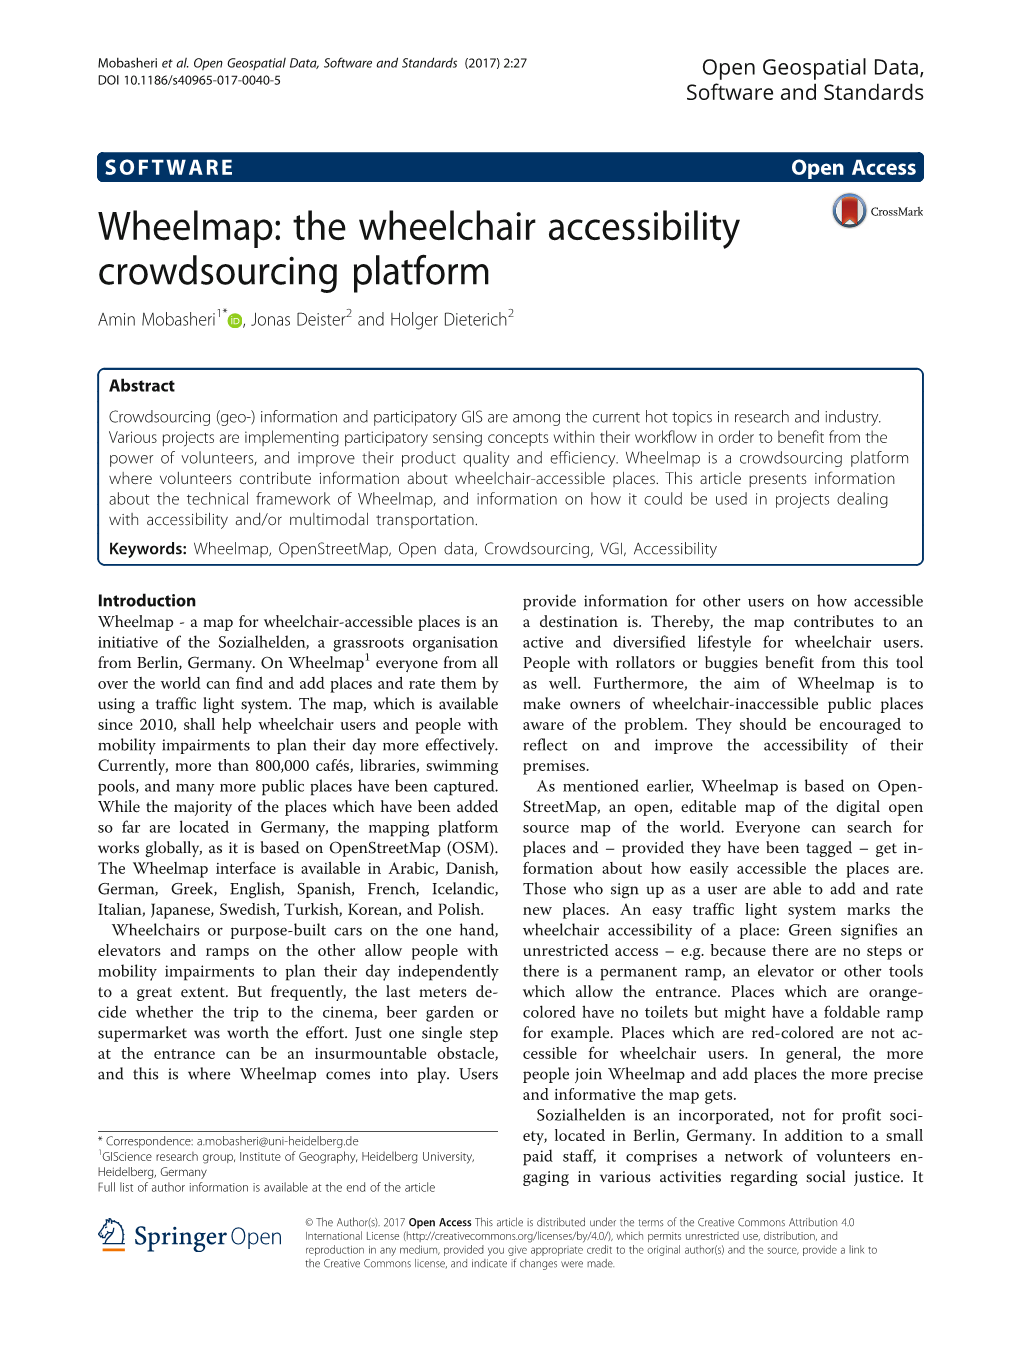 Wheelmap: the Wheelchair Accessibility Crowdsourcing Platform Amin Mobasheri1* , Jonas Deister2 and Holger Dieterich2